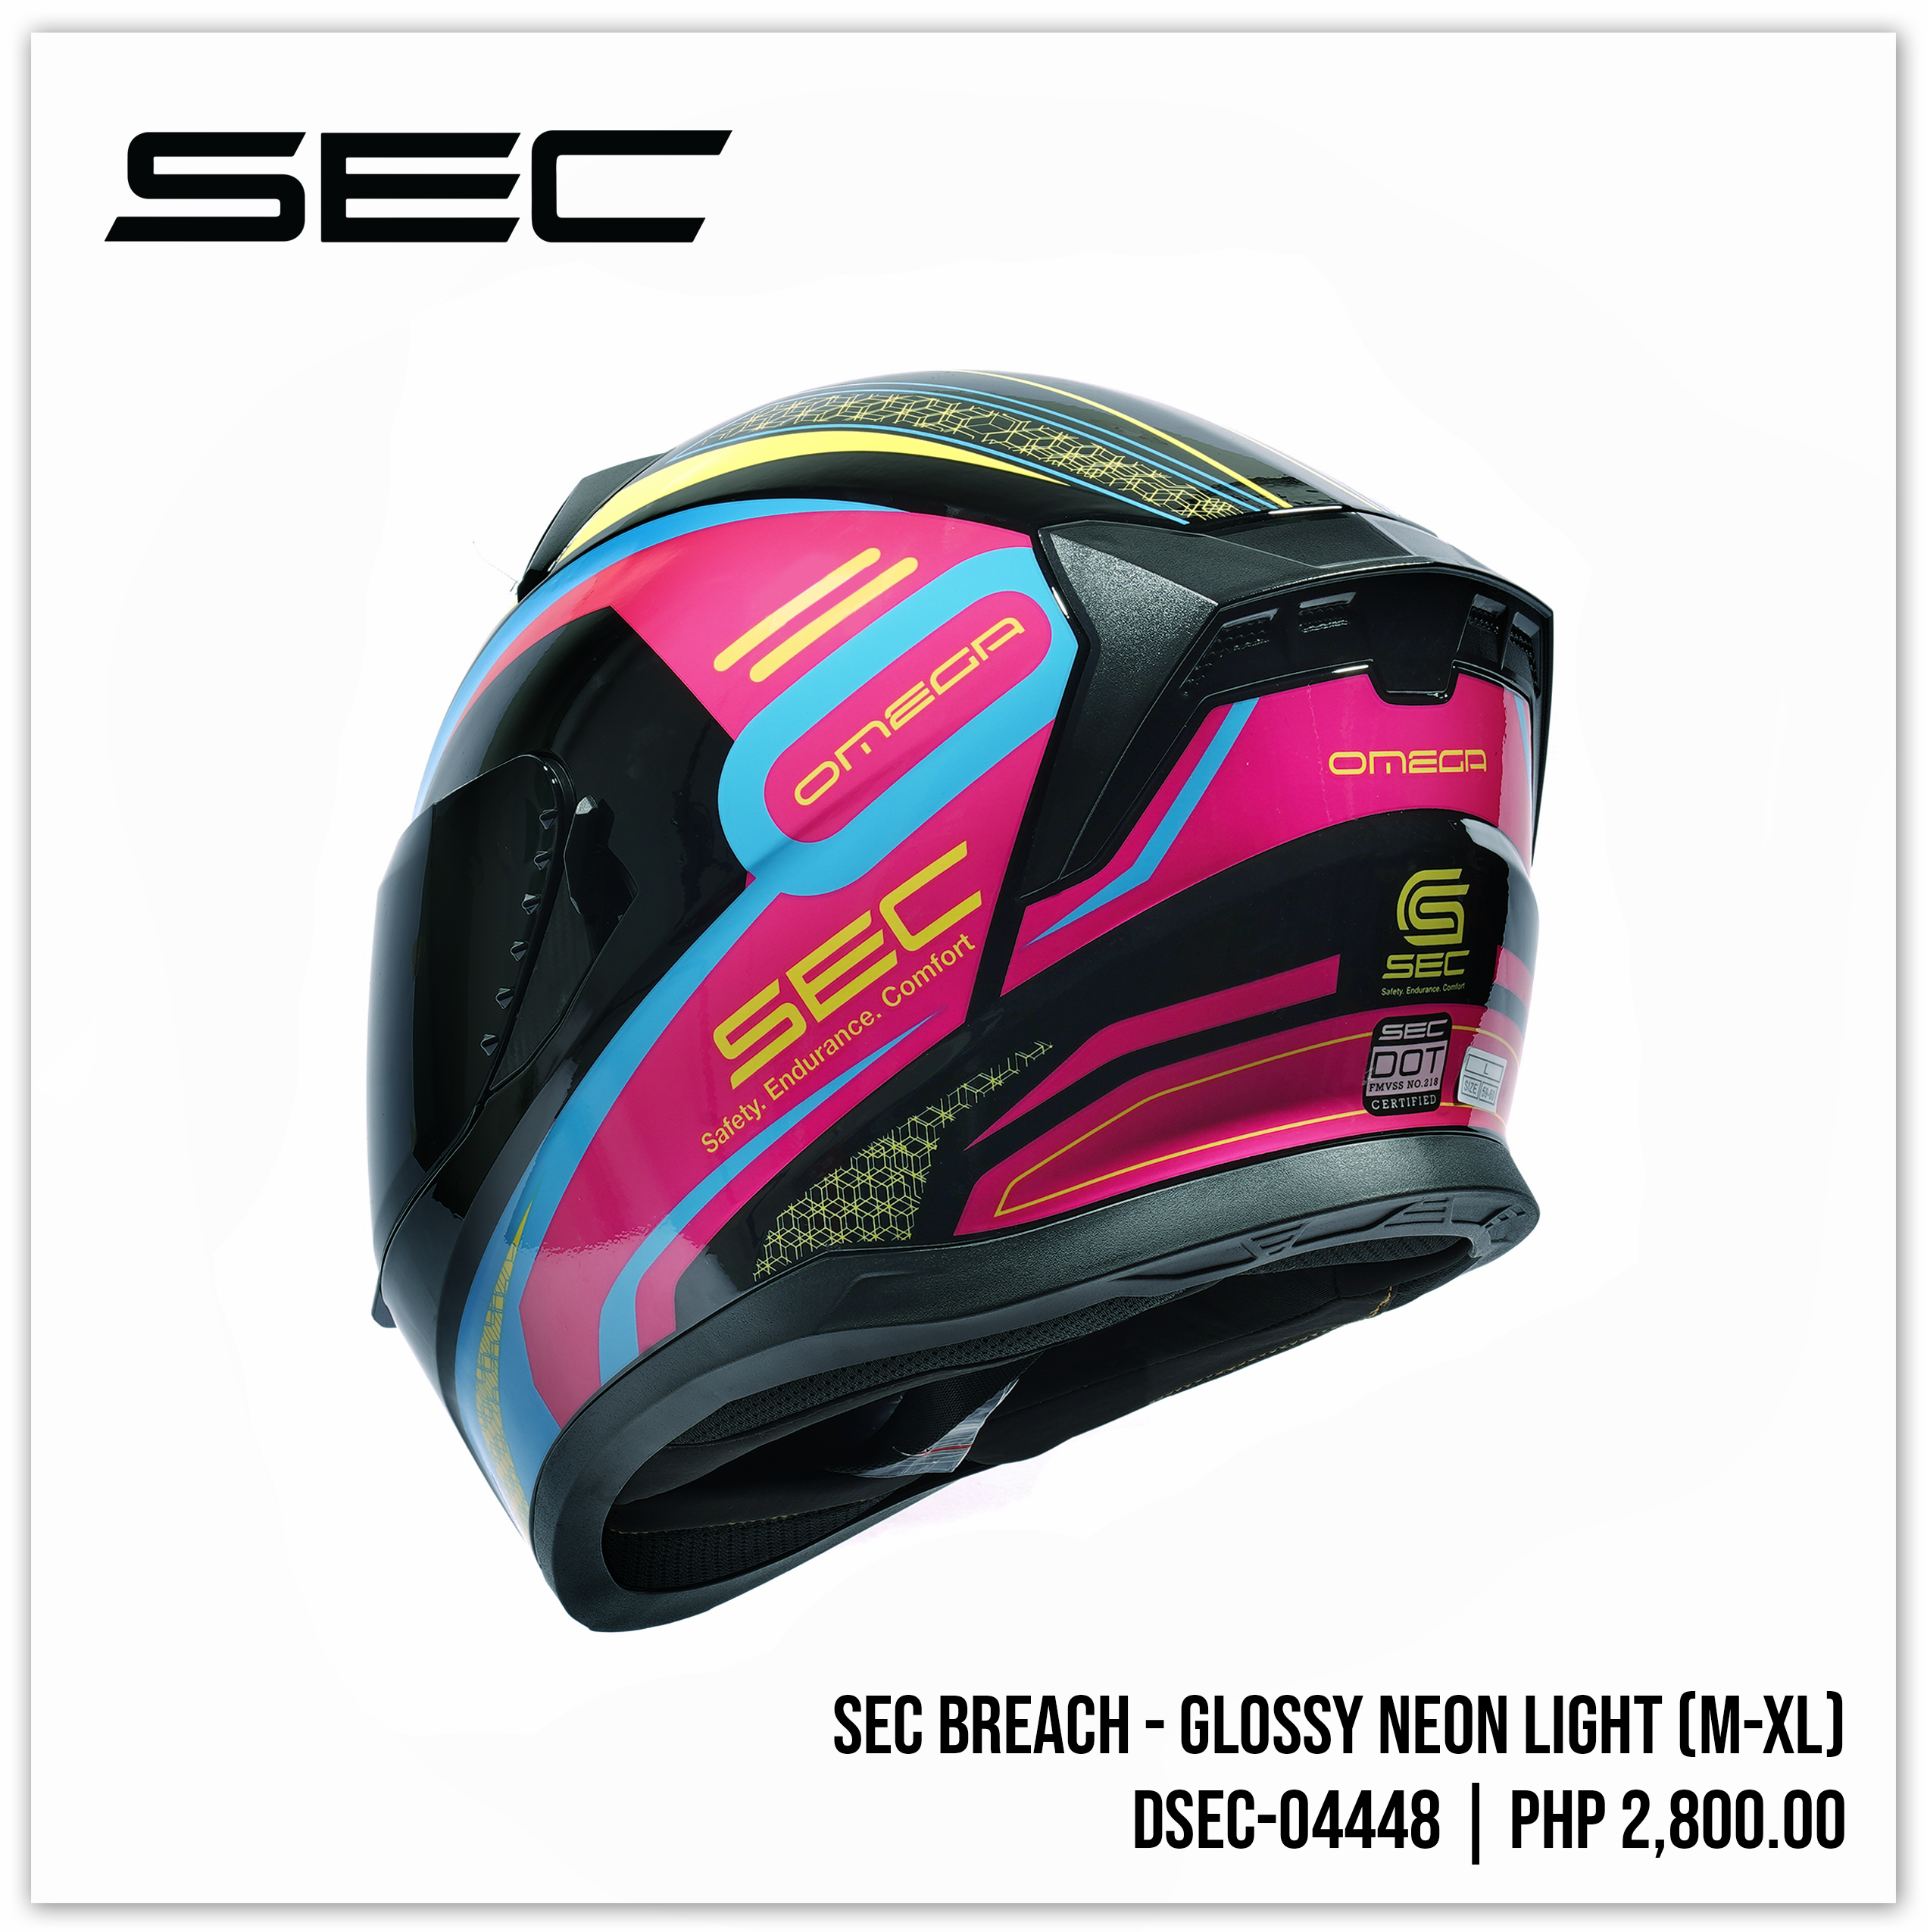 SEC Breach - Glossy Neon Light